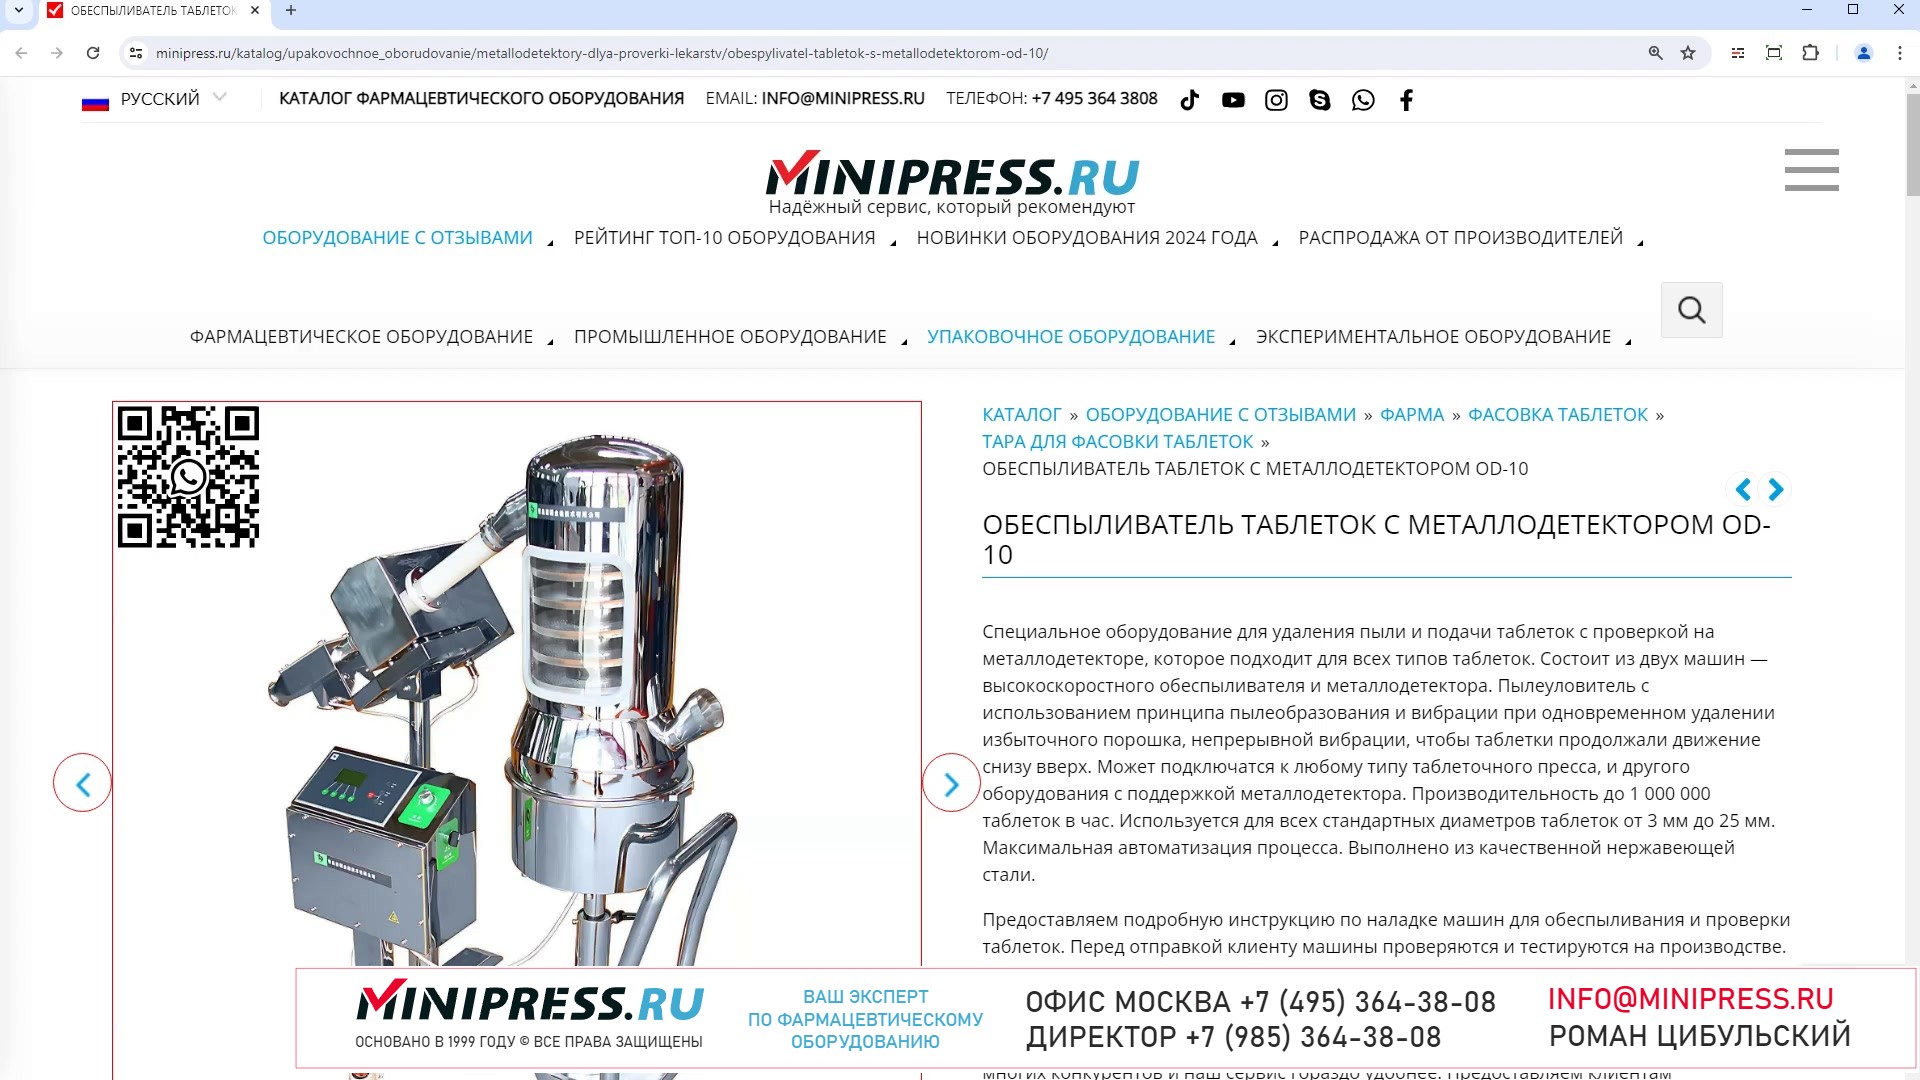 Minipress.ru Обеспыливатель таблеток с металлодетектором OD-10